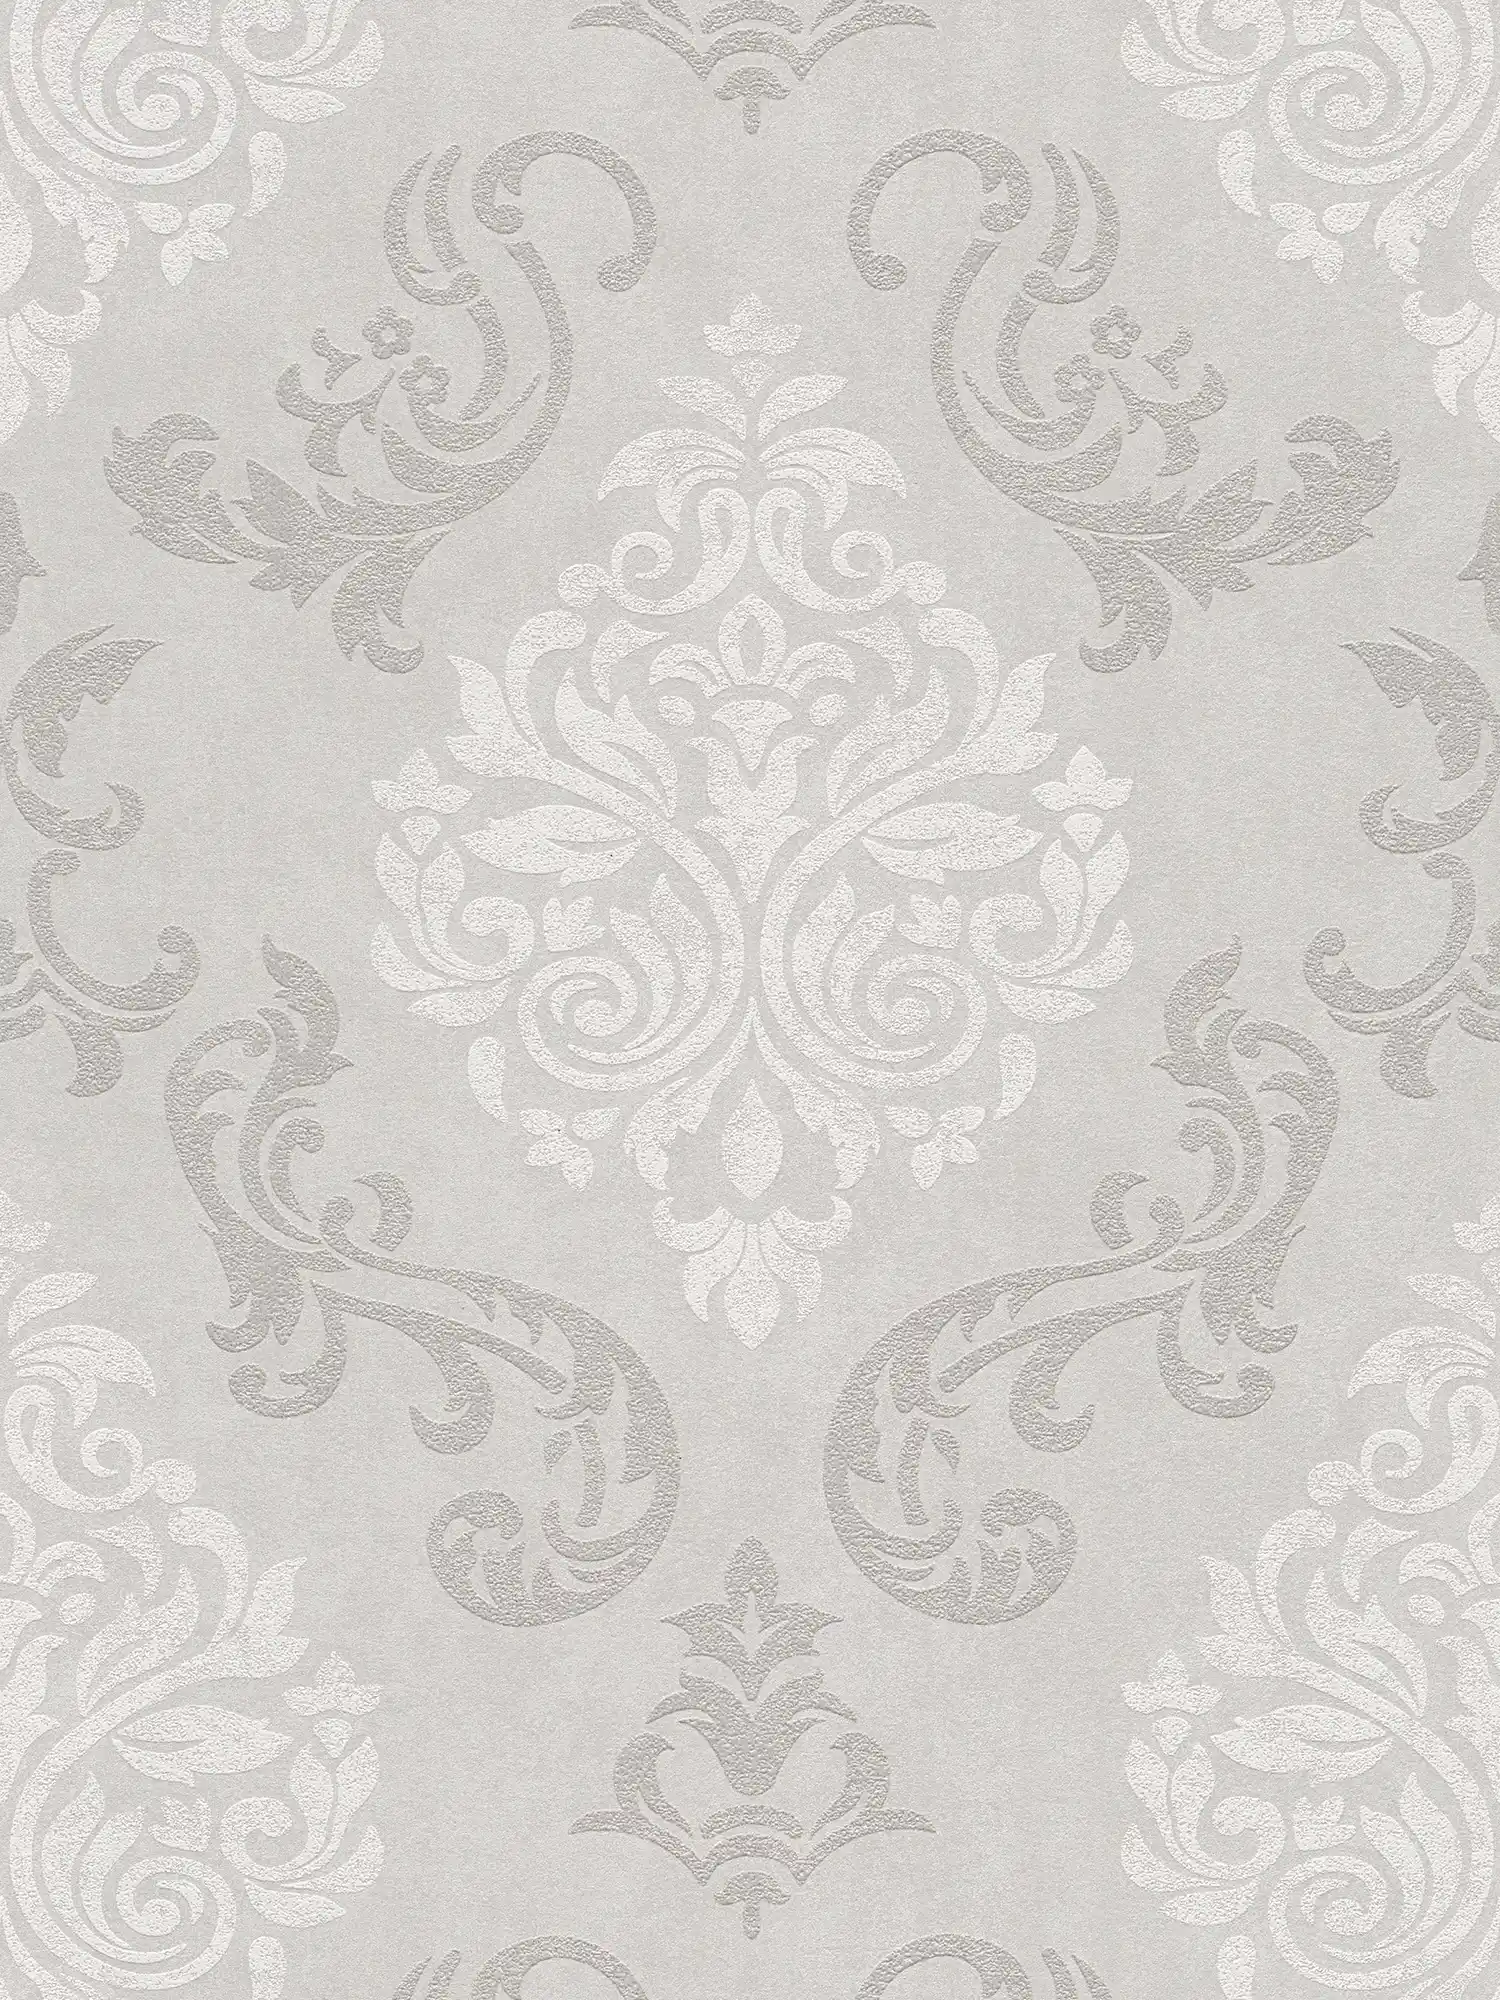 Ornaments wallpaper baroque style with glitter effect - beige, cream, metallic
